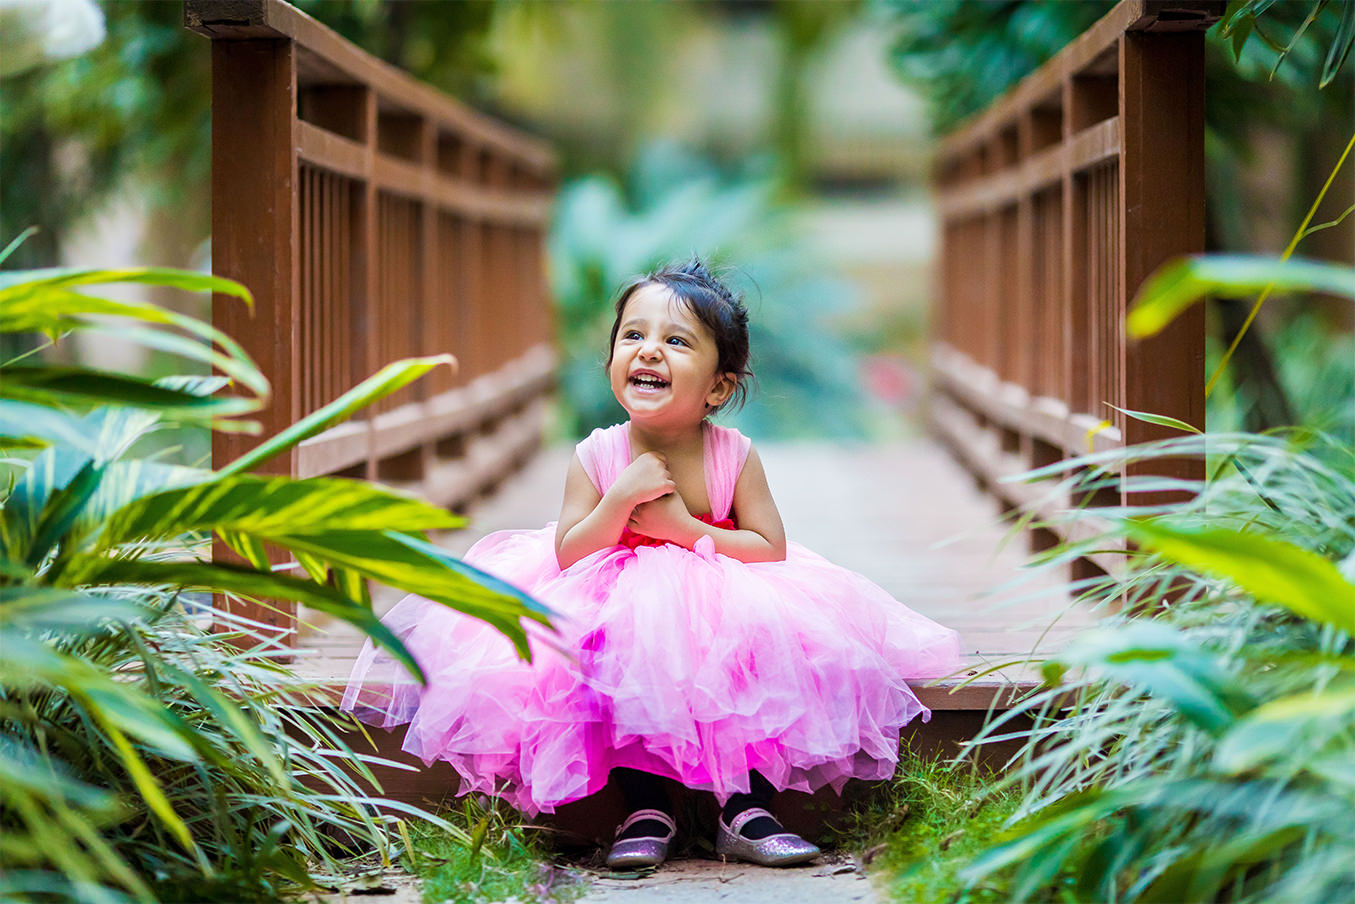 Neeta-Shankar-Photography-Baby-Kids-Portraits-Milestone-Sessions